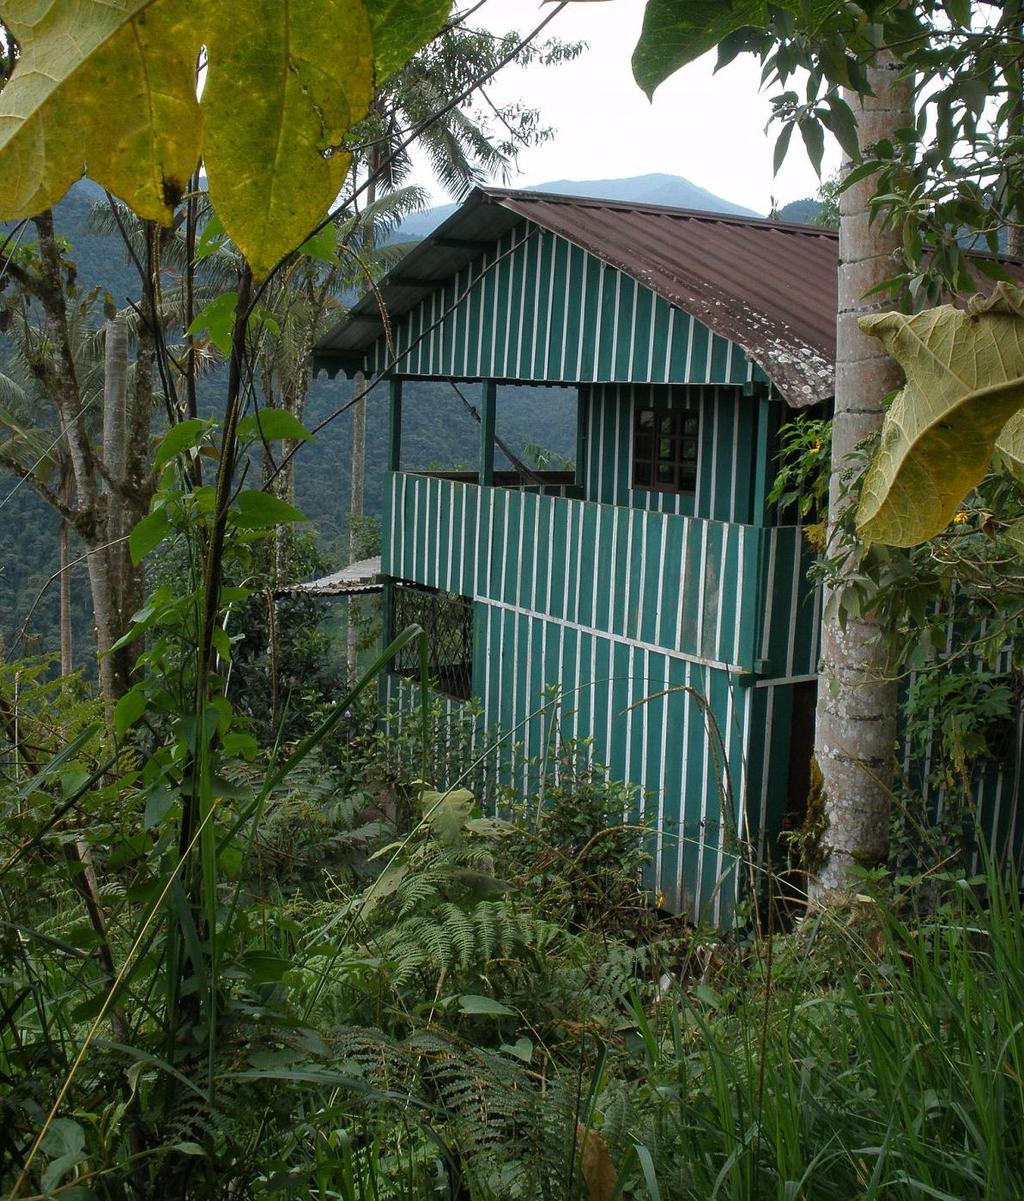 Join us as we build a cabin for Word of Life Ecuador at their Camp Property near Quito, Ecuador.